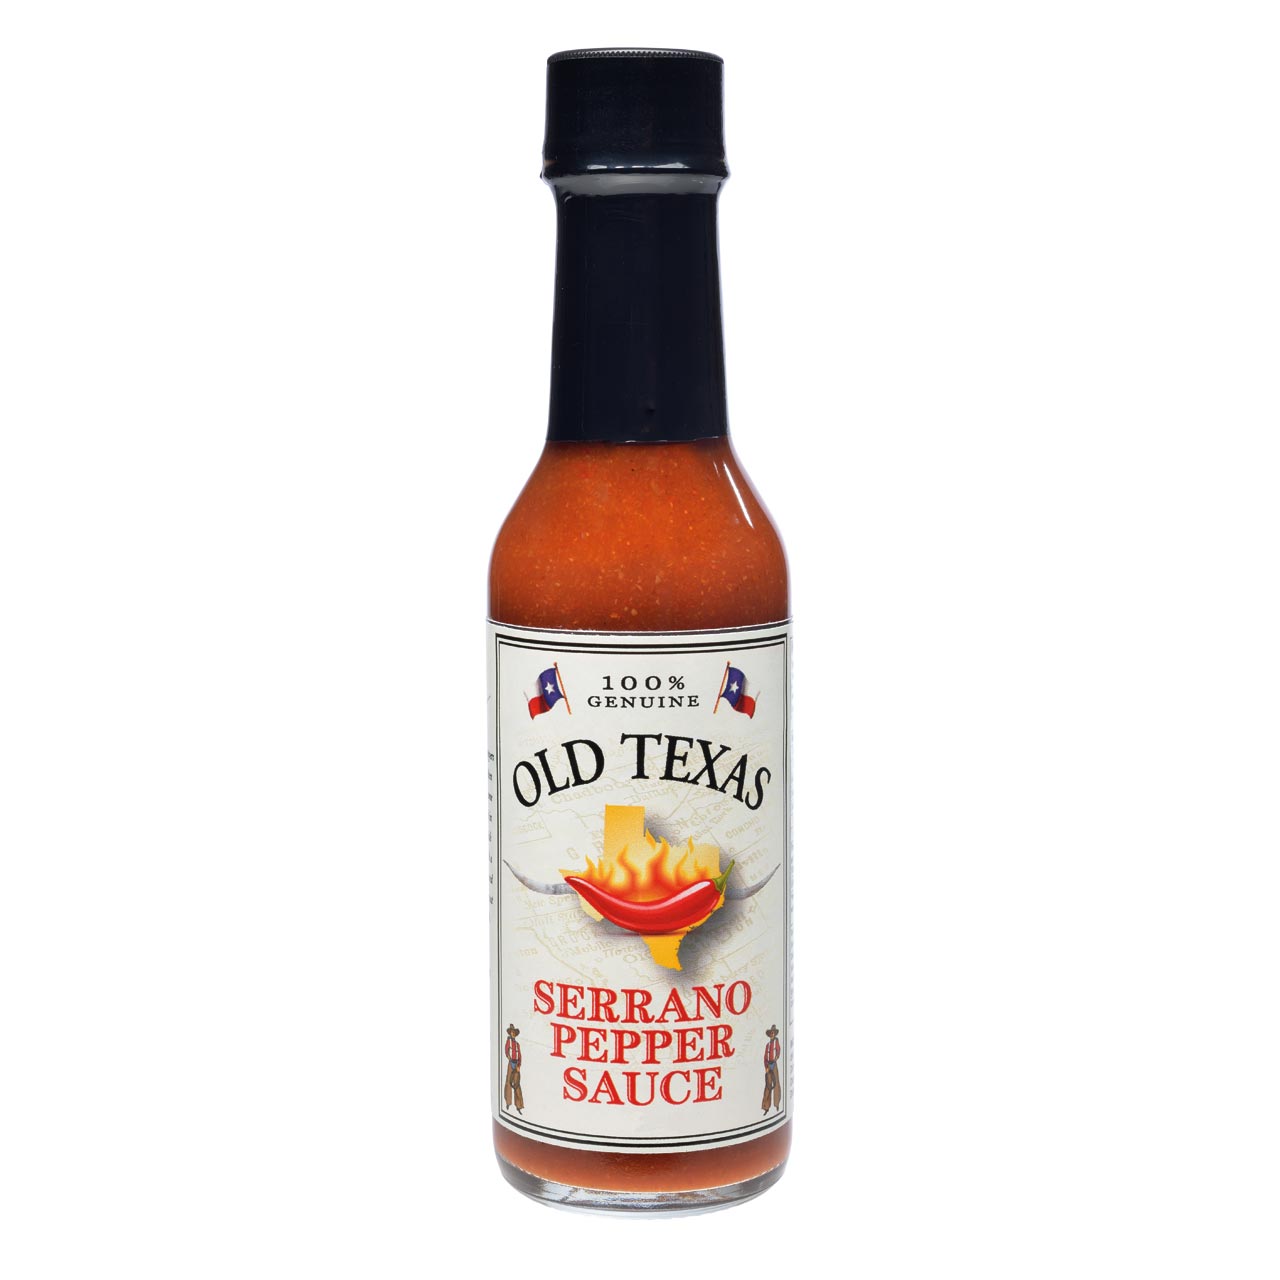 Old Texas Serrano Pepper Sauce